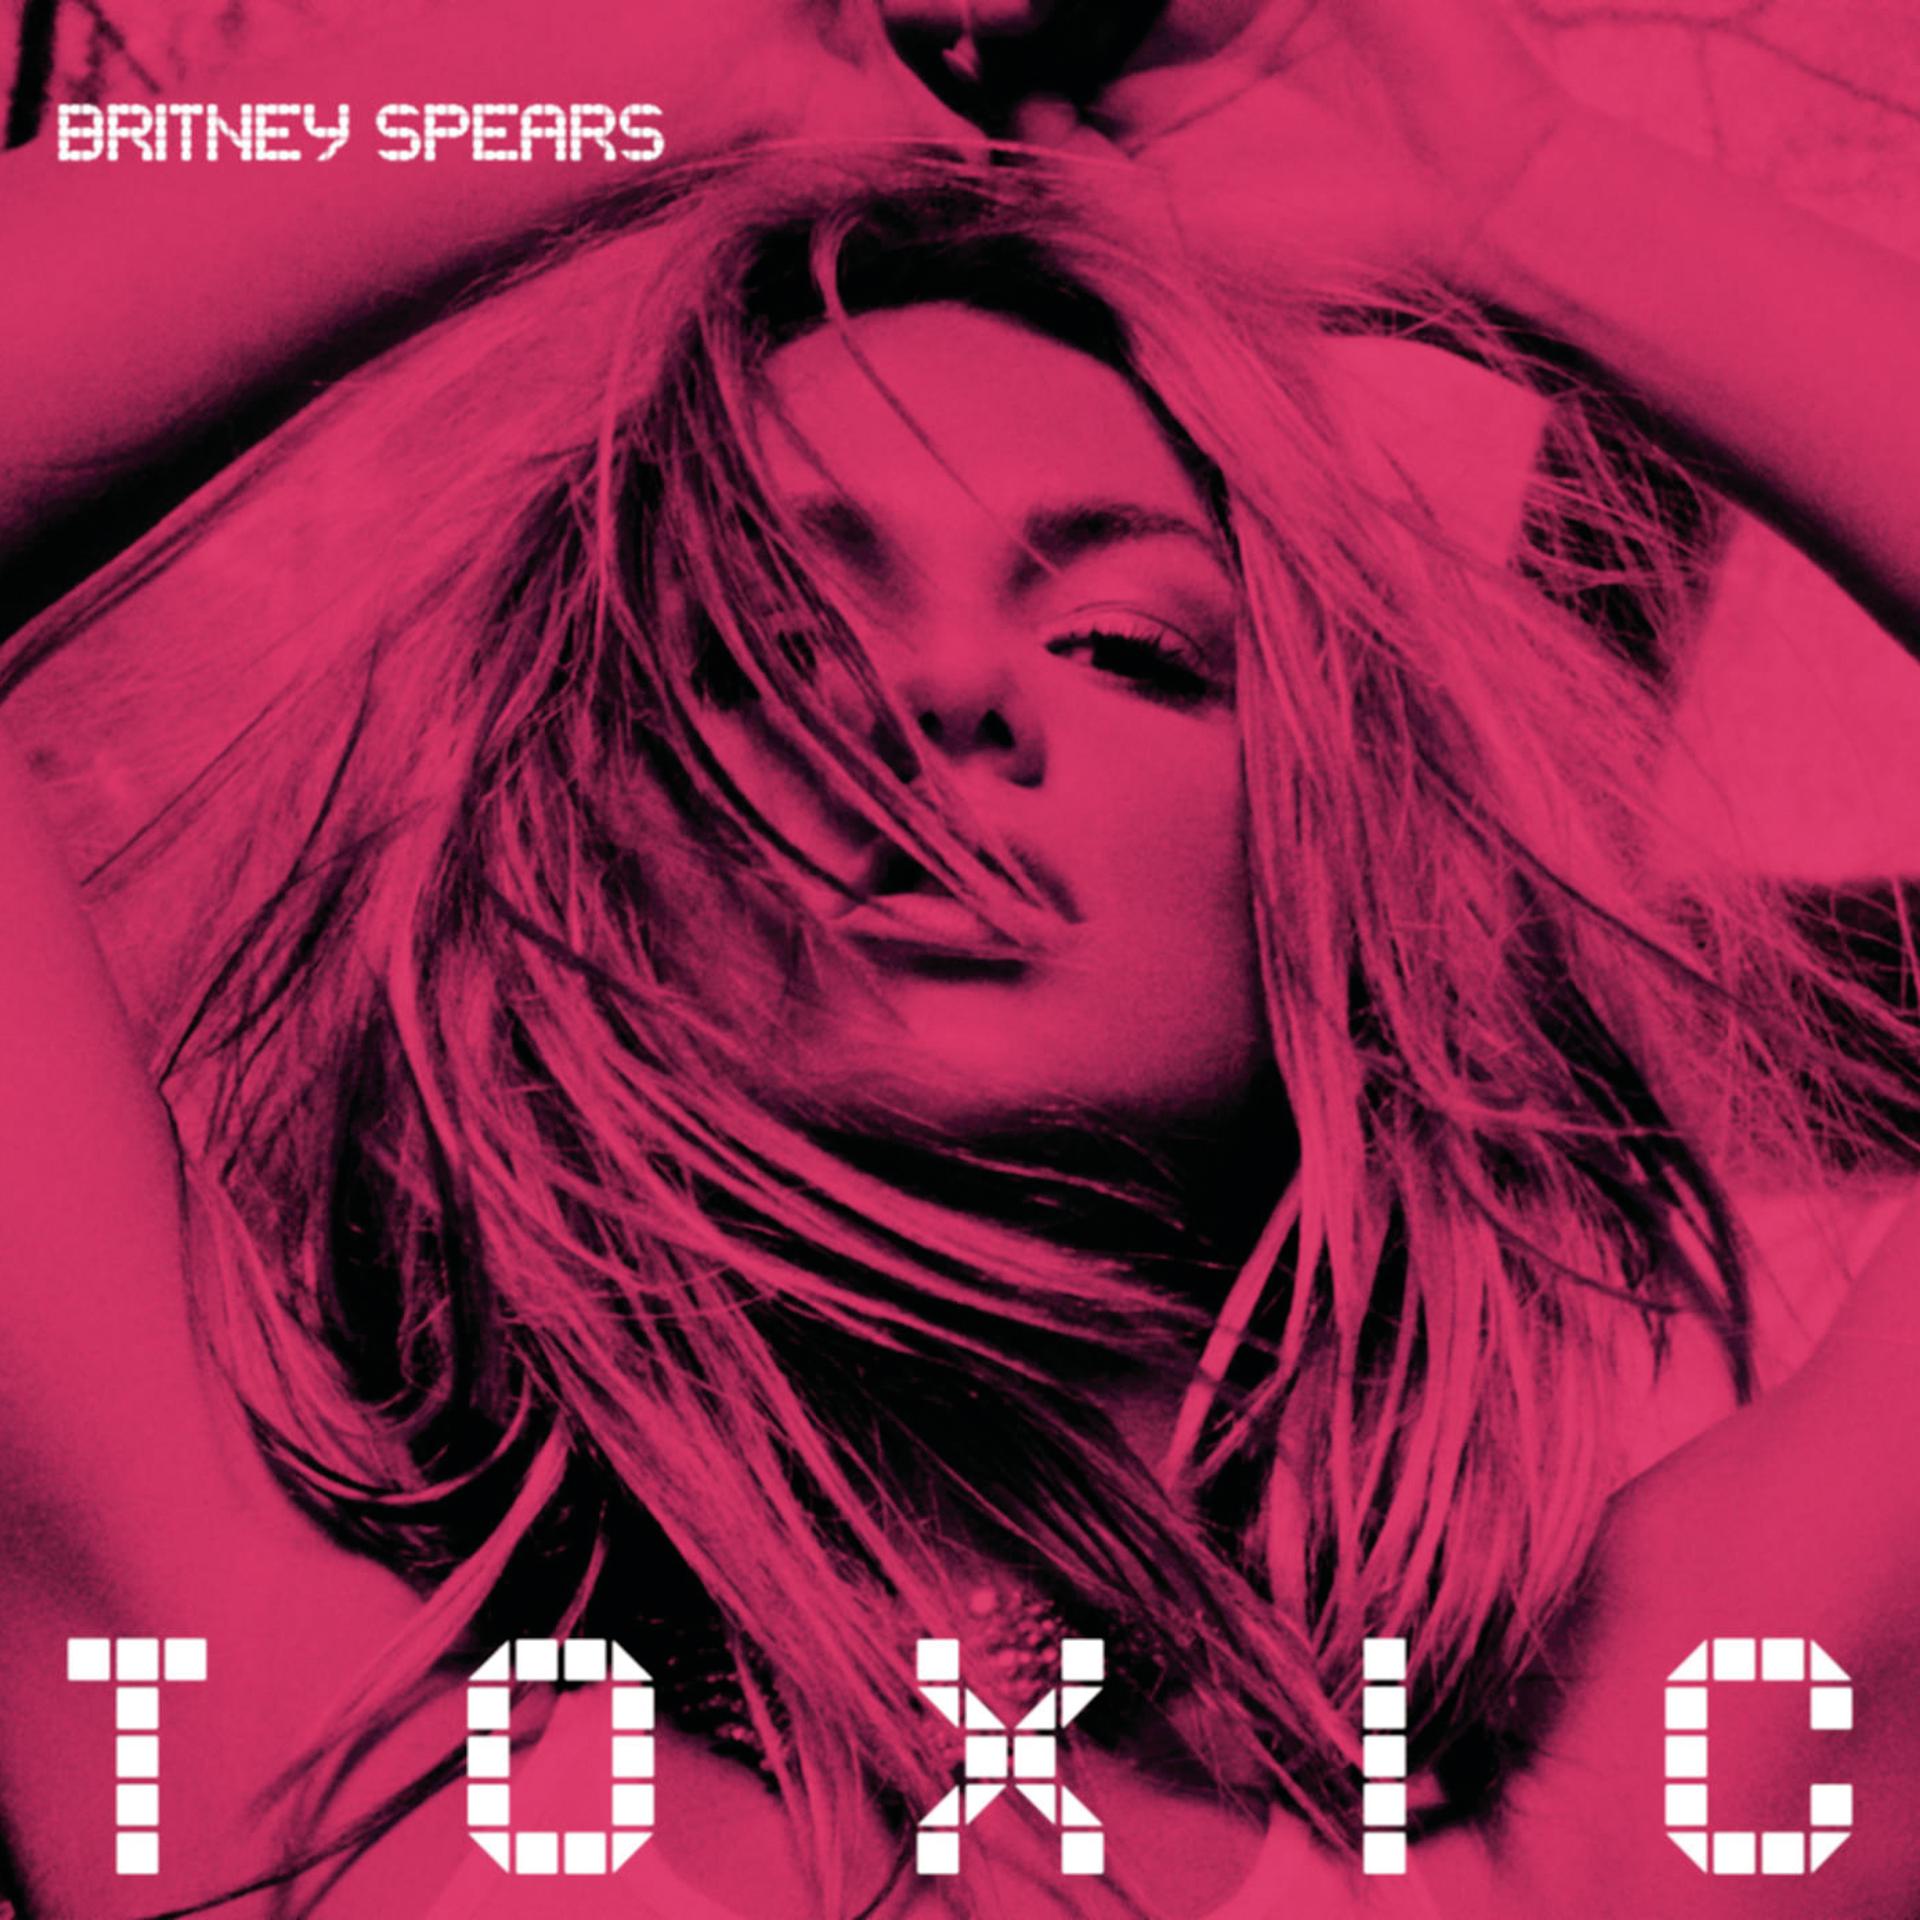 Toxic Бритни Спирс обложка. Britney Spears Toxic 2004. Бритни Спирс Токсик. Бритни Спирс обложка. Токсик песня бритни спирс